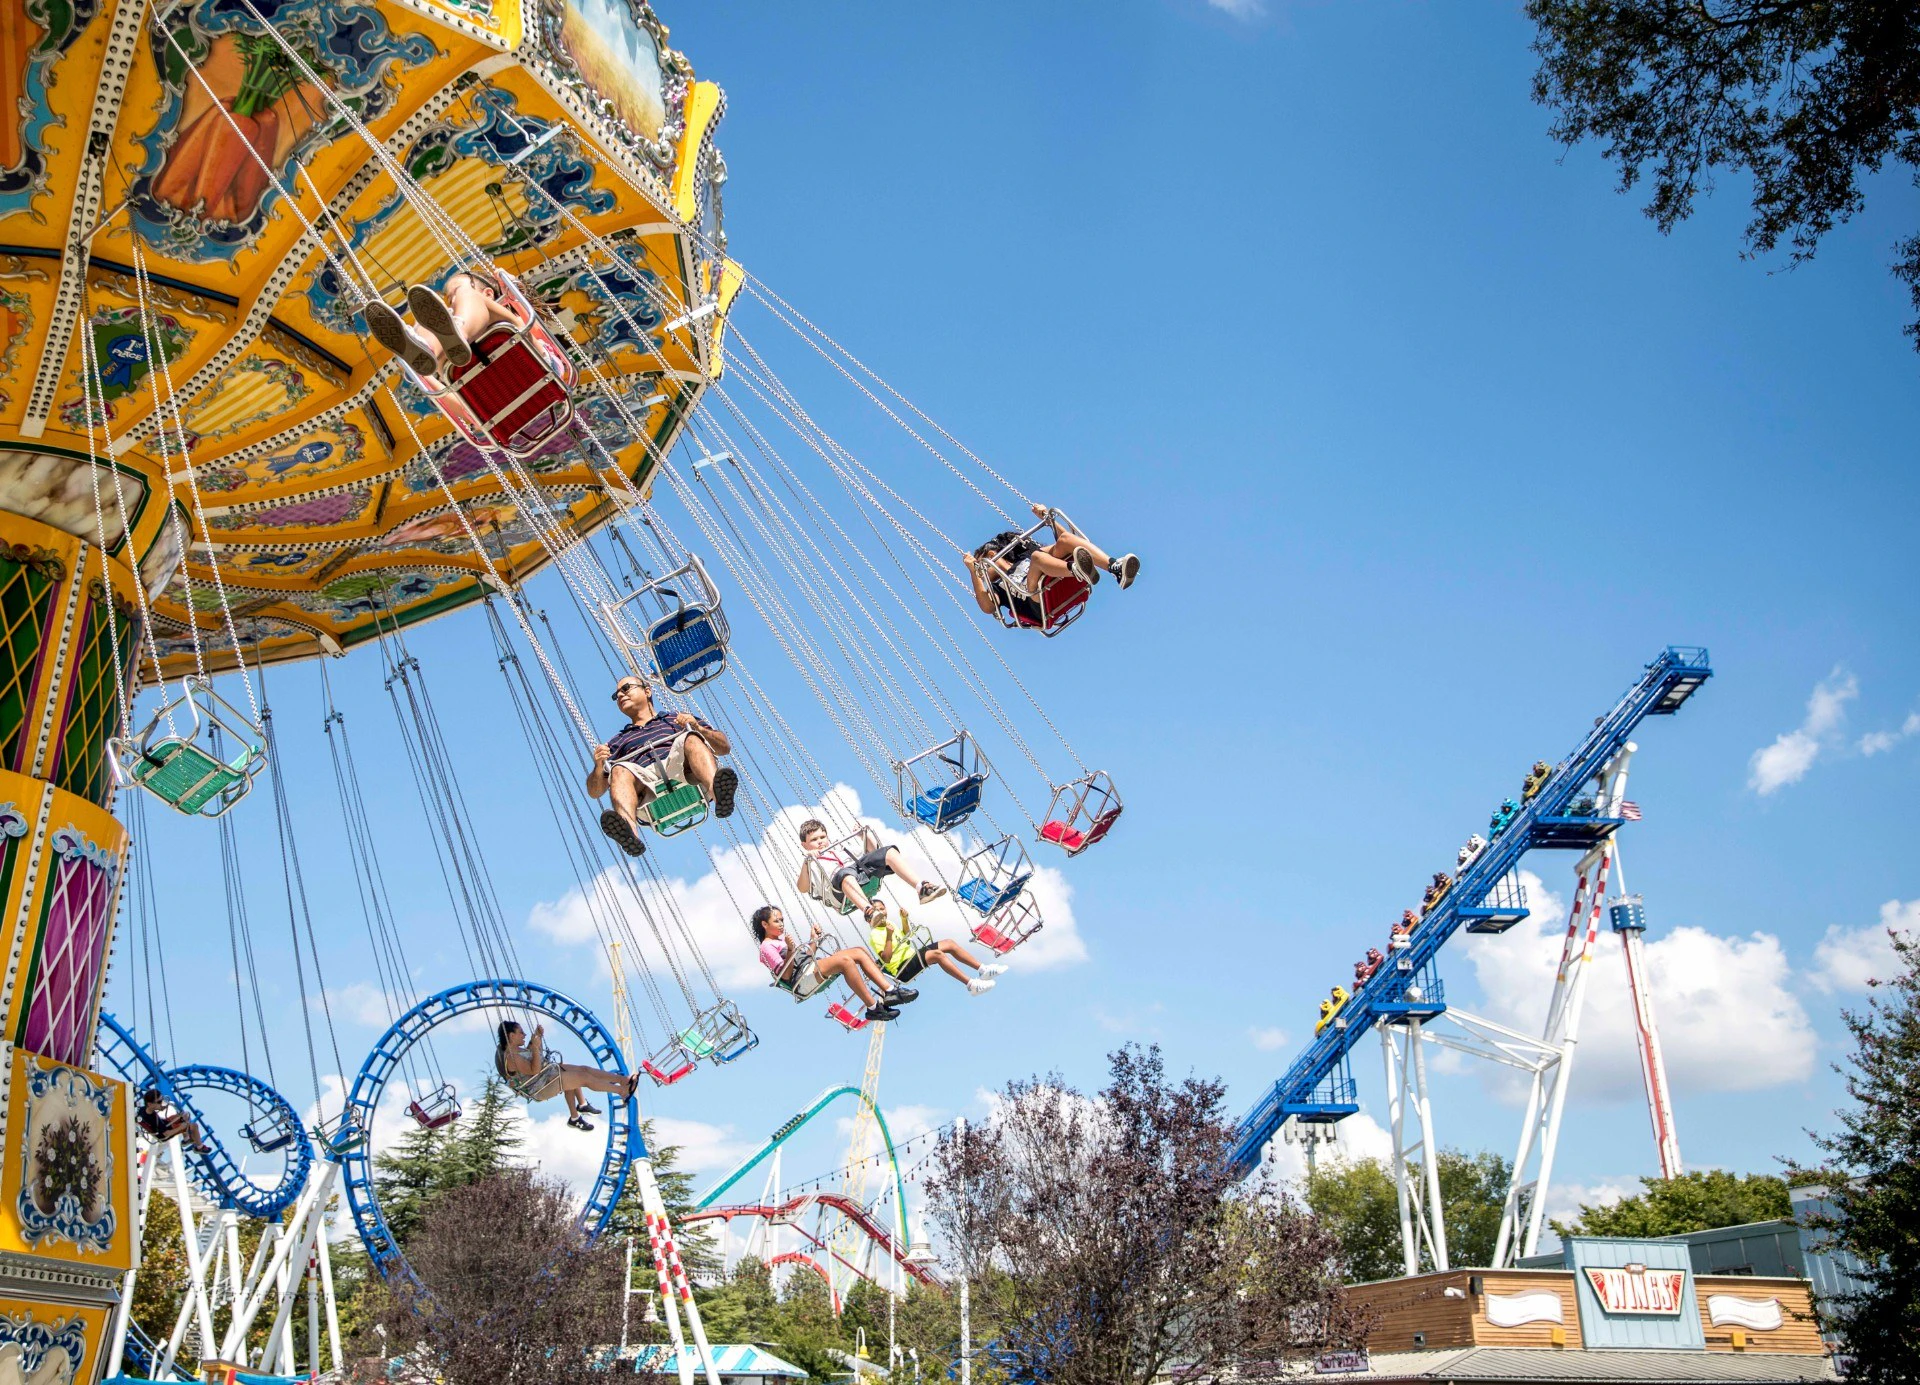 Carowinds Amusement Park in Charlotte, NC